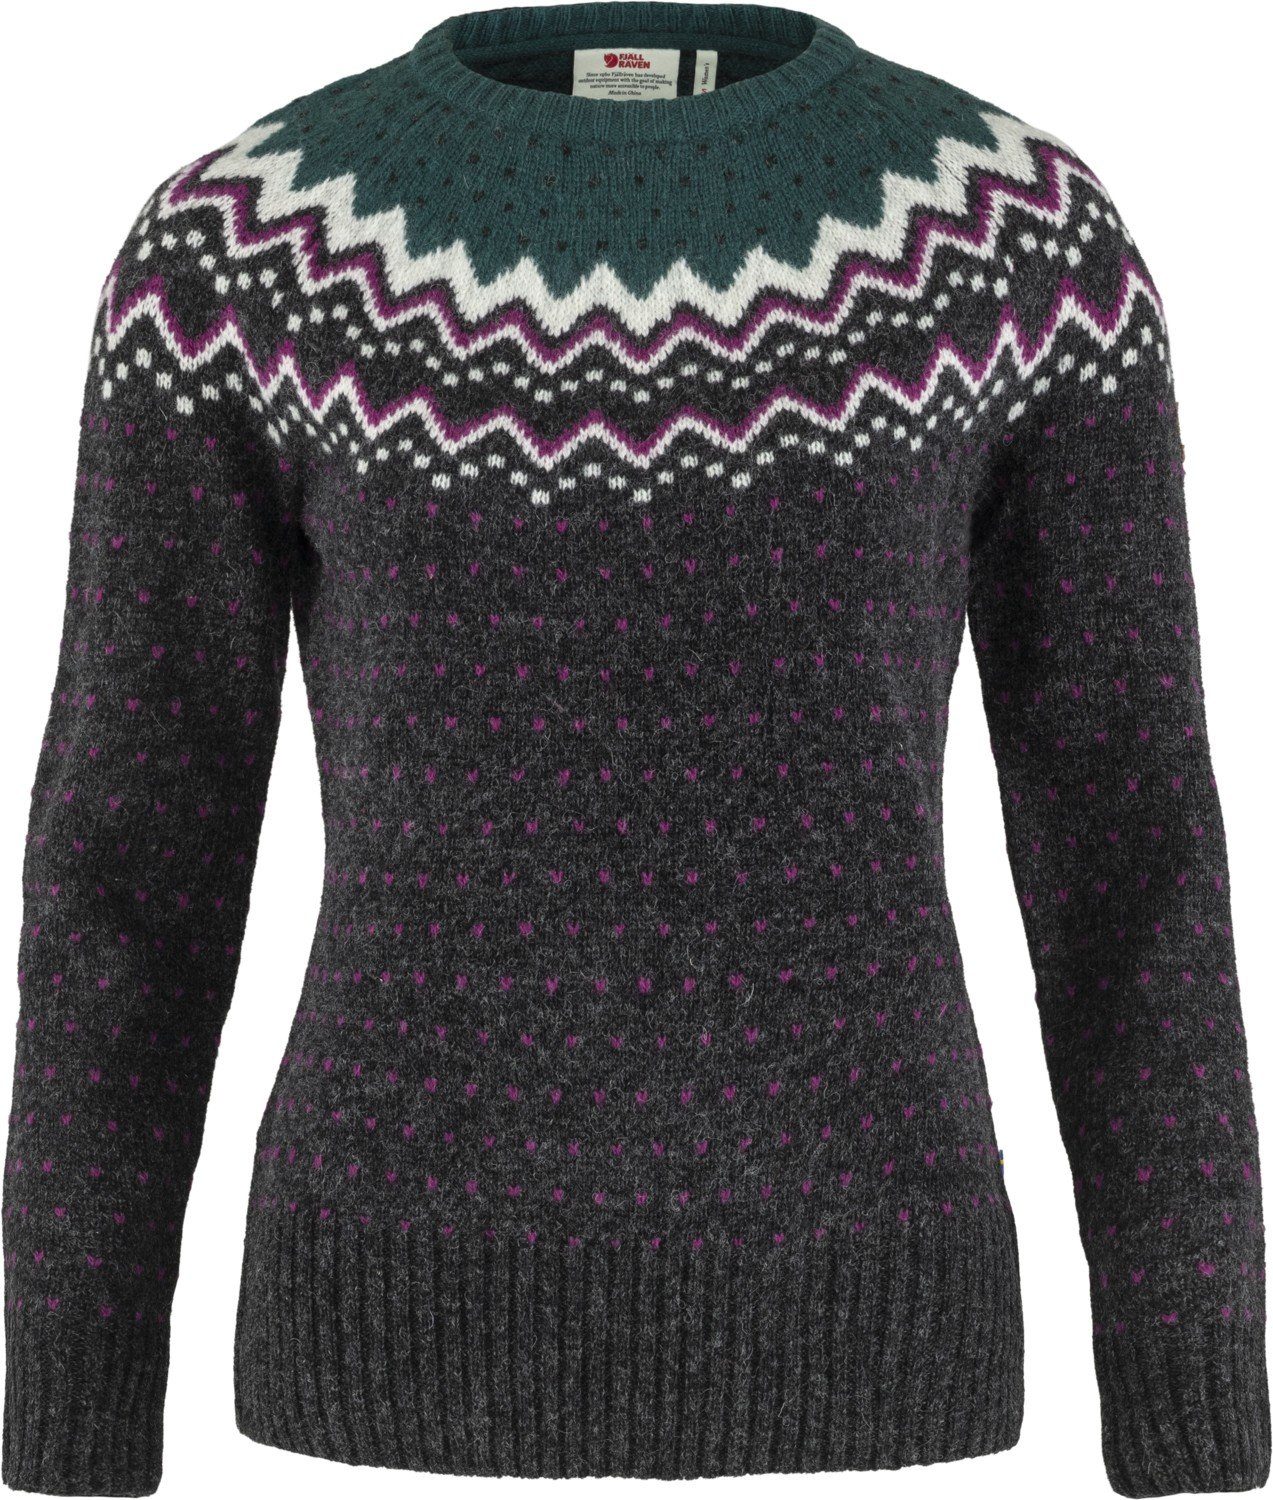 Övik Sweater Knit arctic green Fjällräven Wollpullover Women